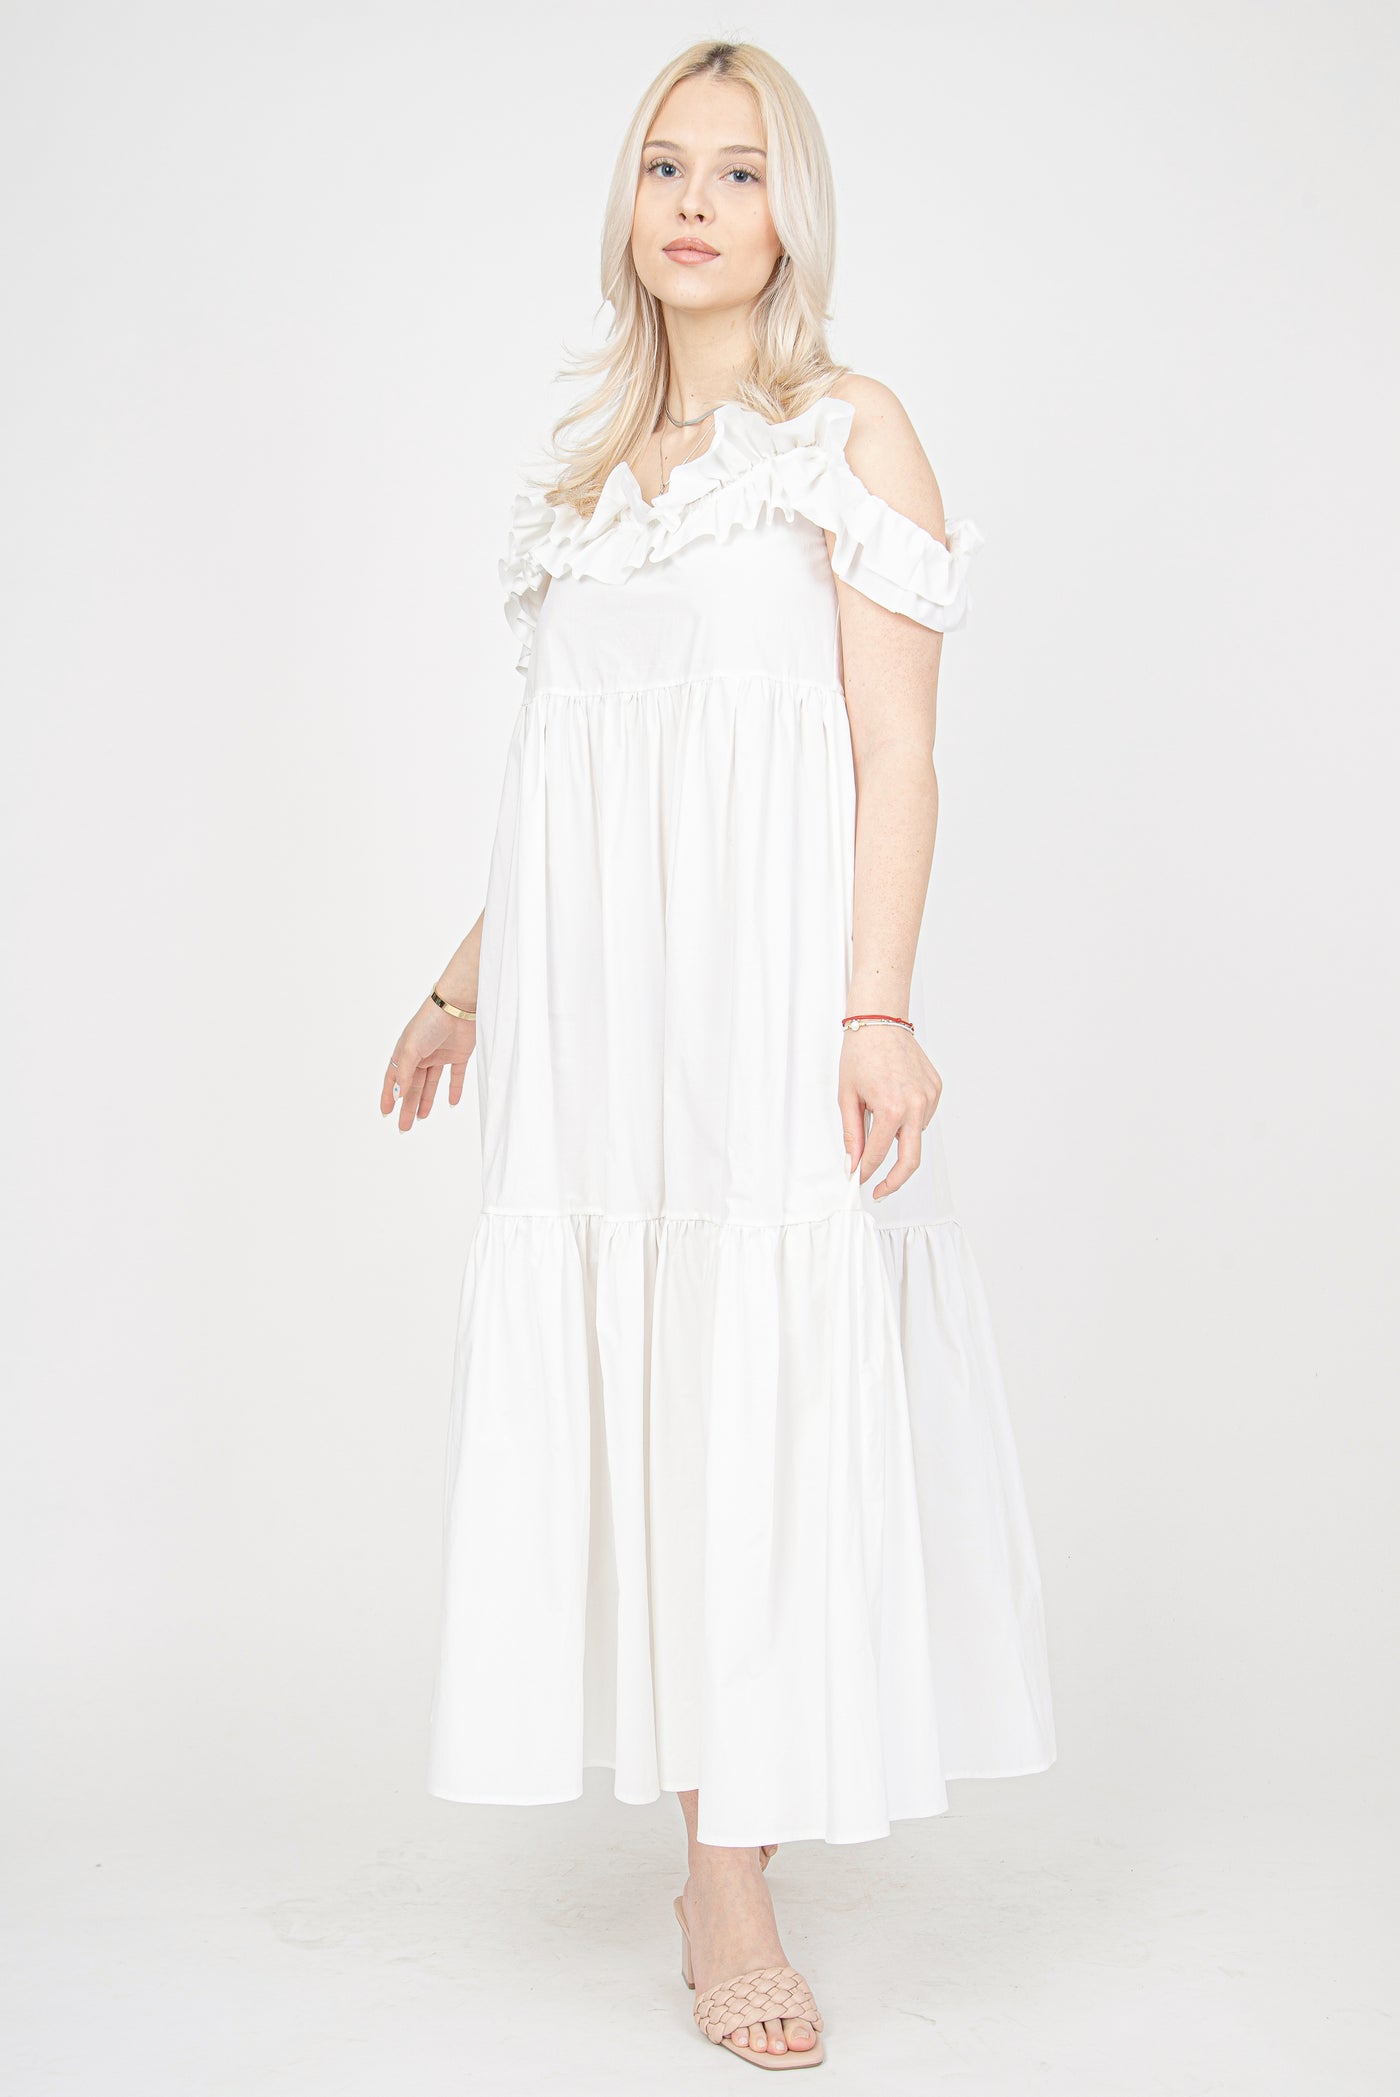 White romantic ruffle dress FC1005